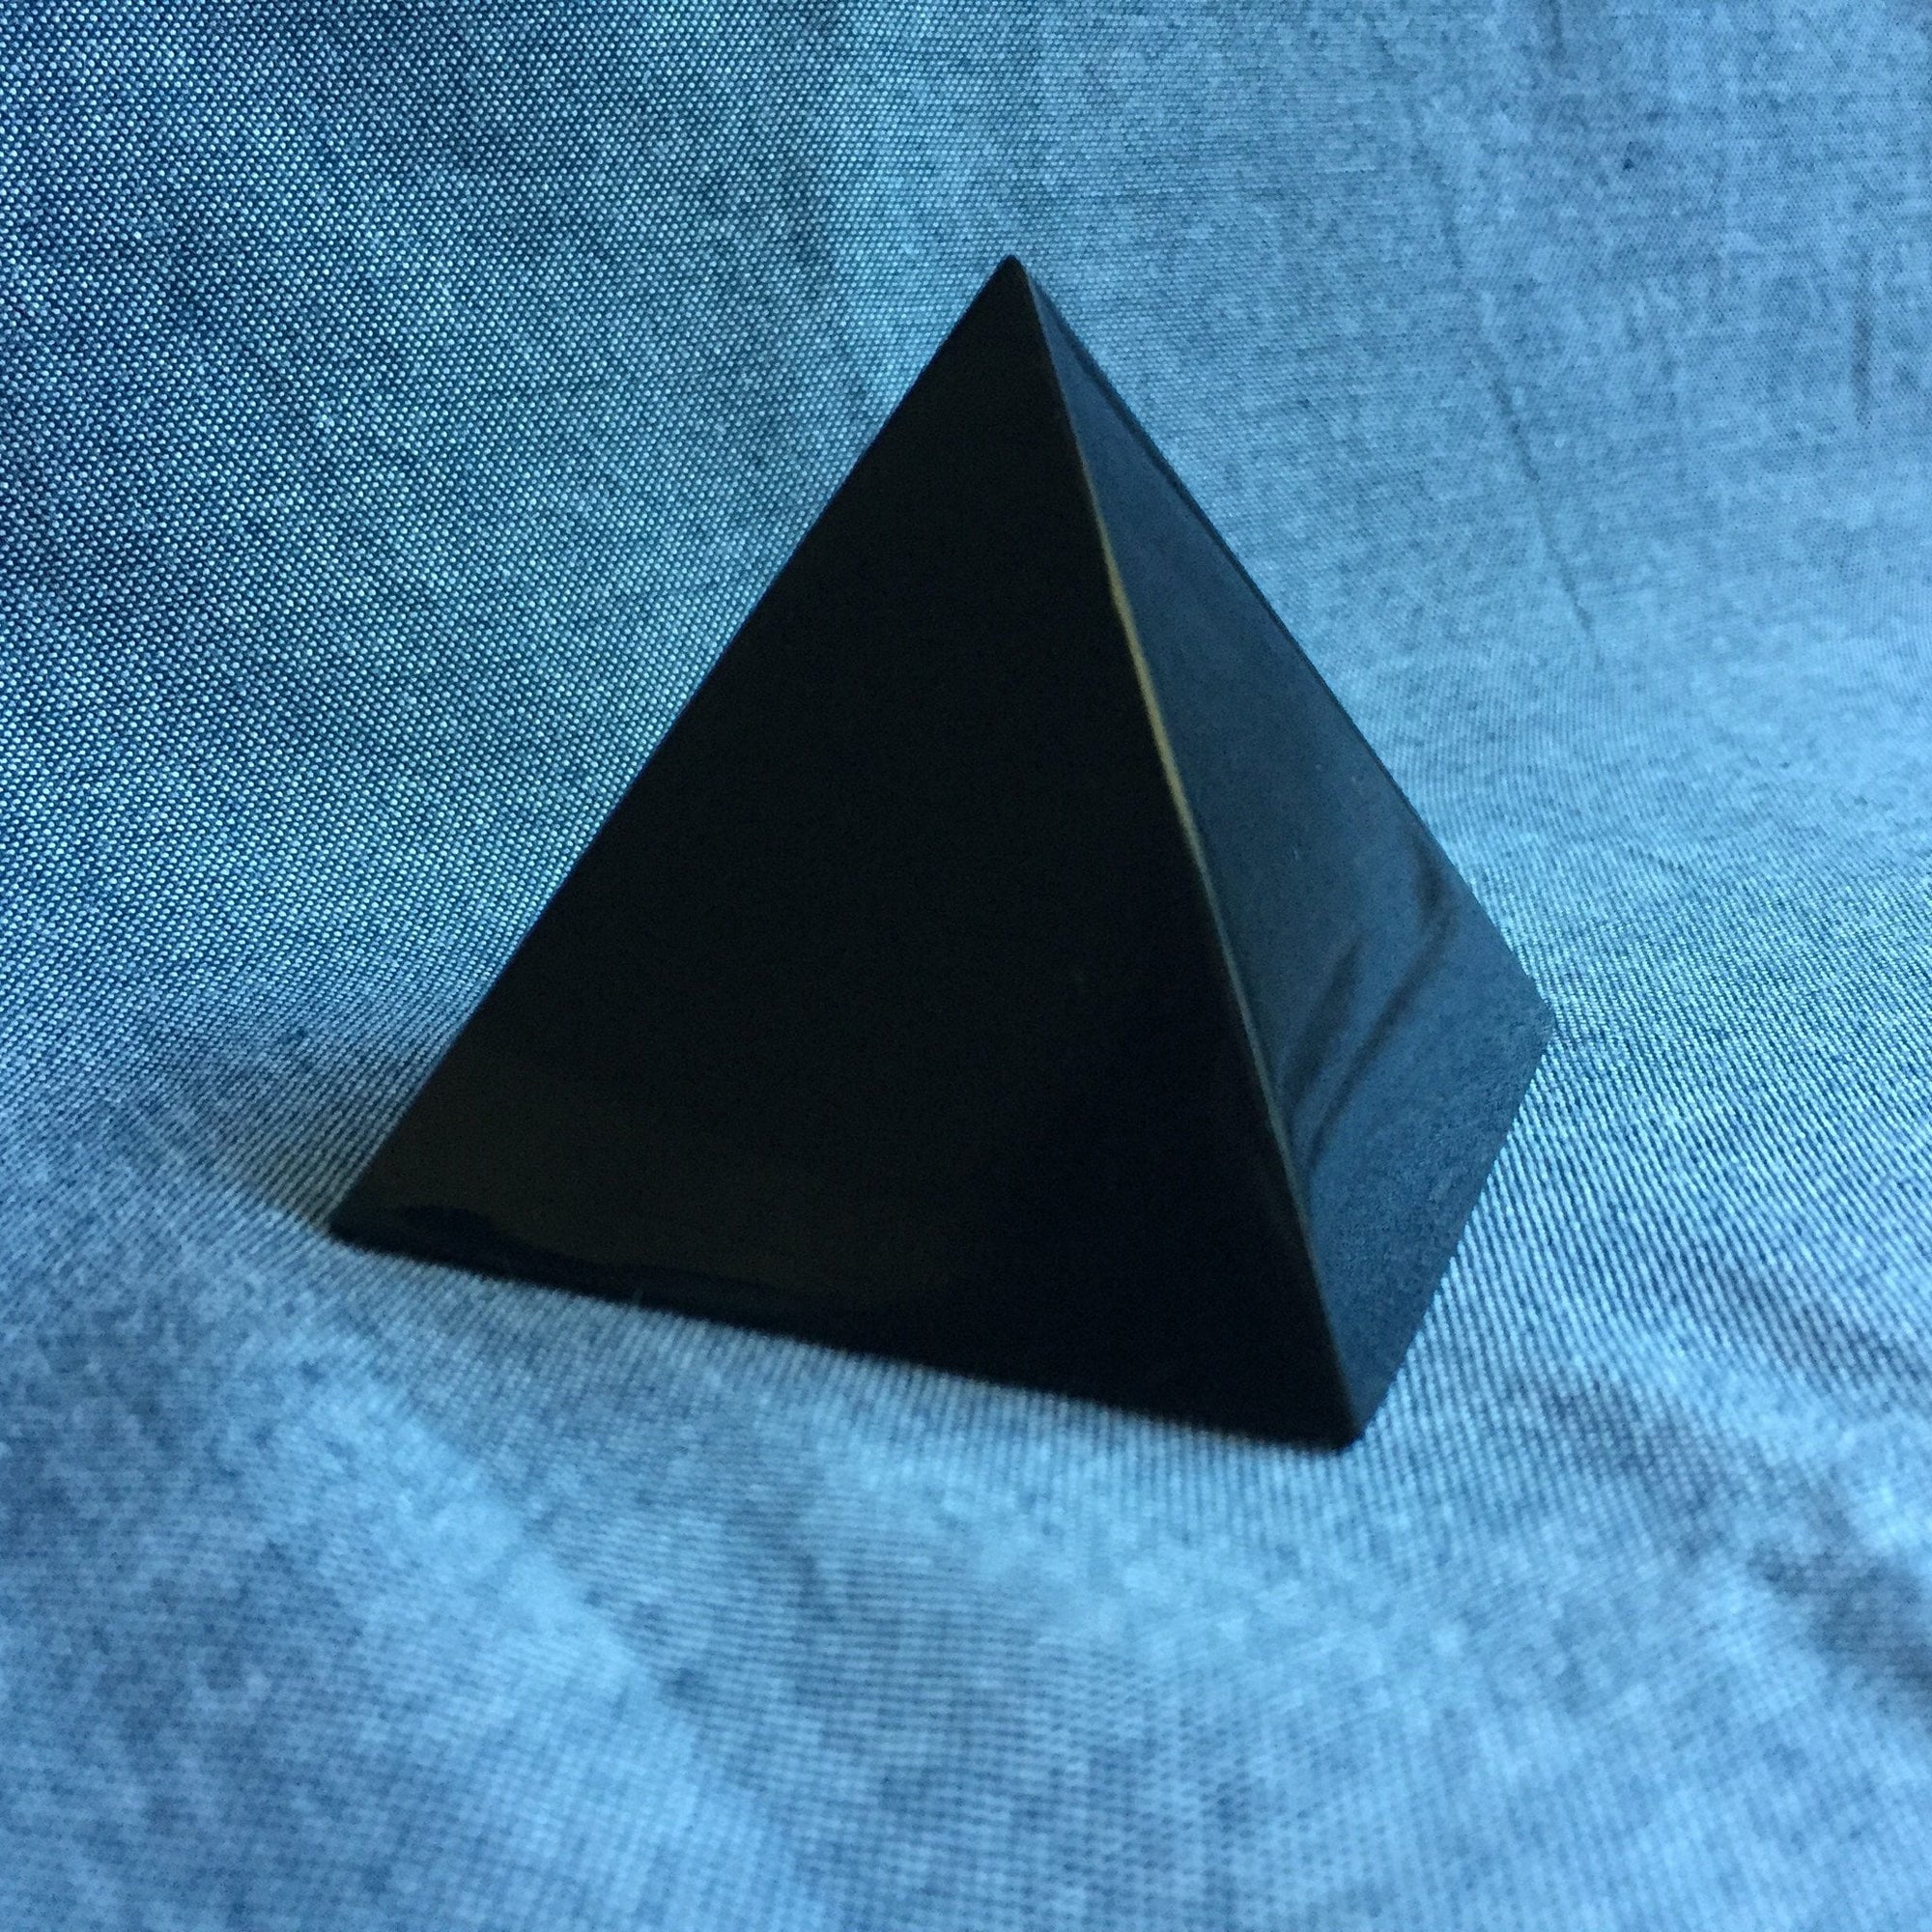 Black Obsidian Pyramid - Sparkle Rock Pop